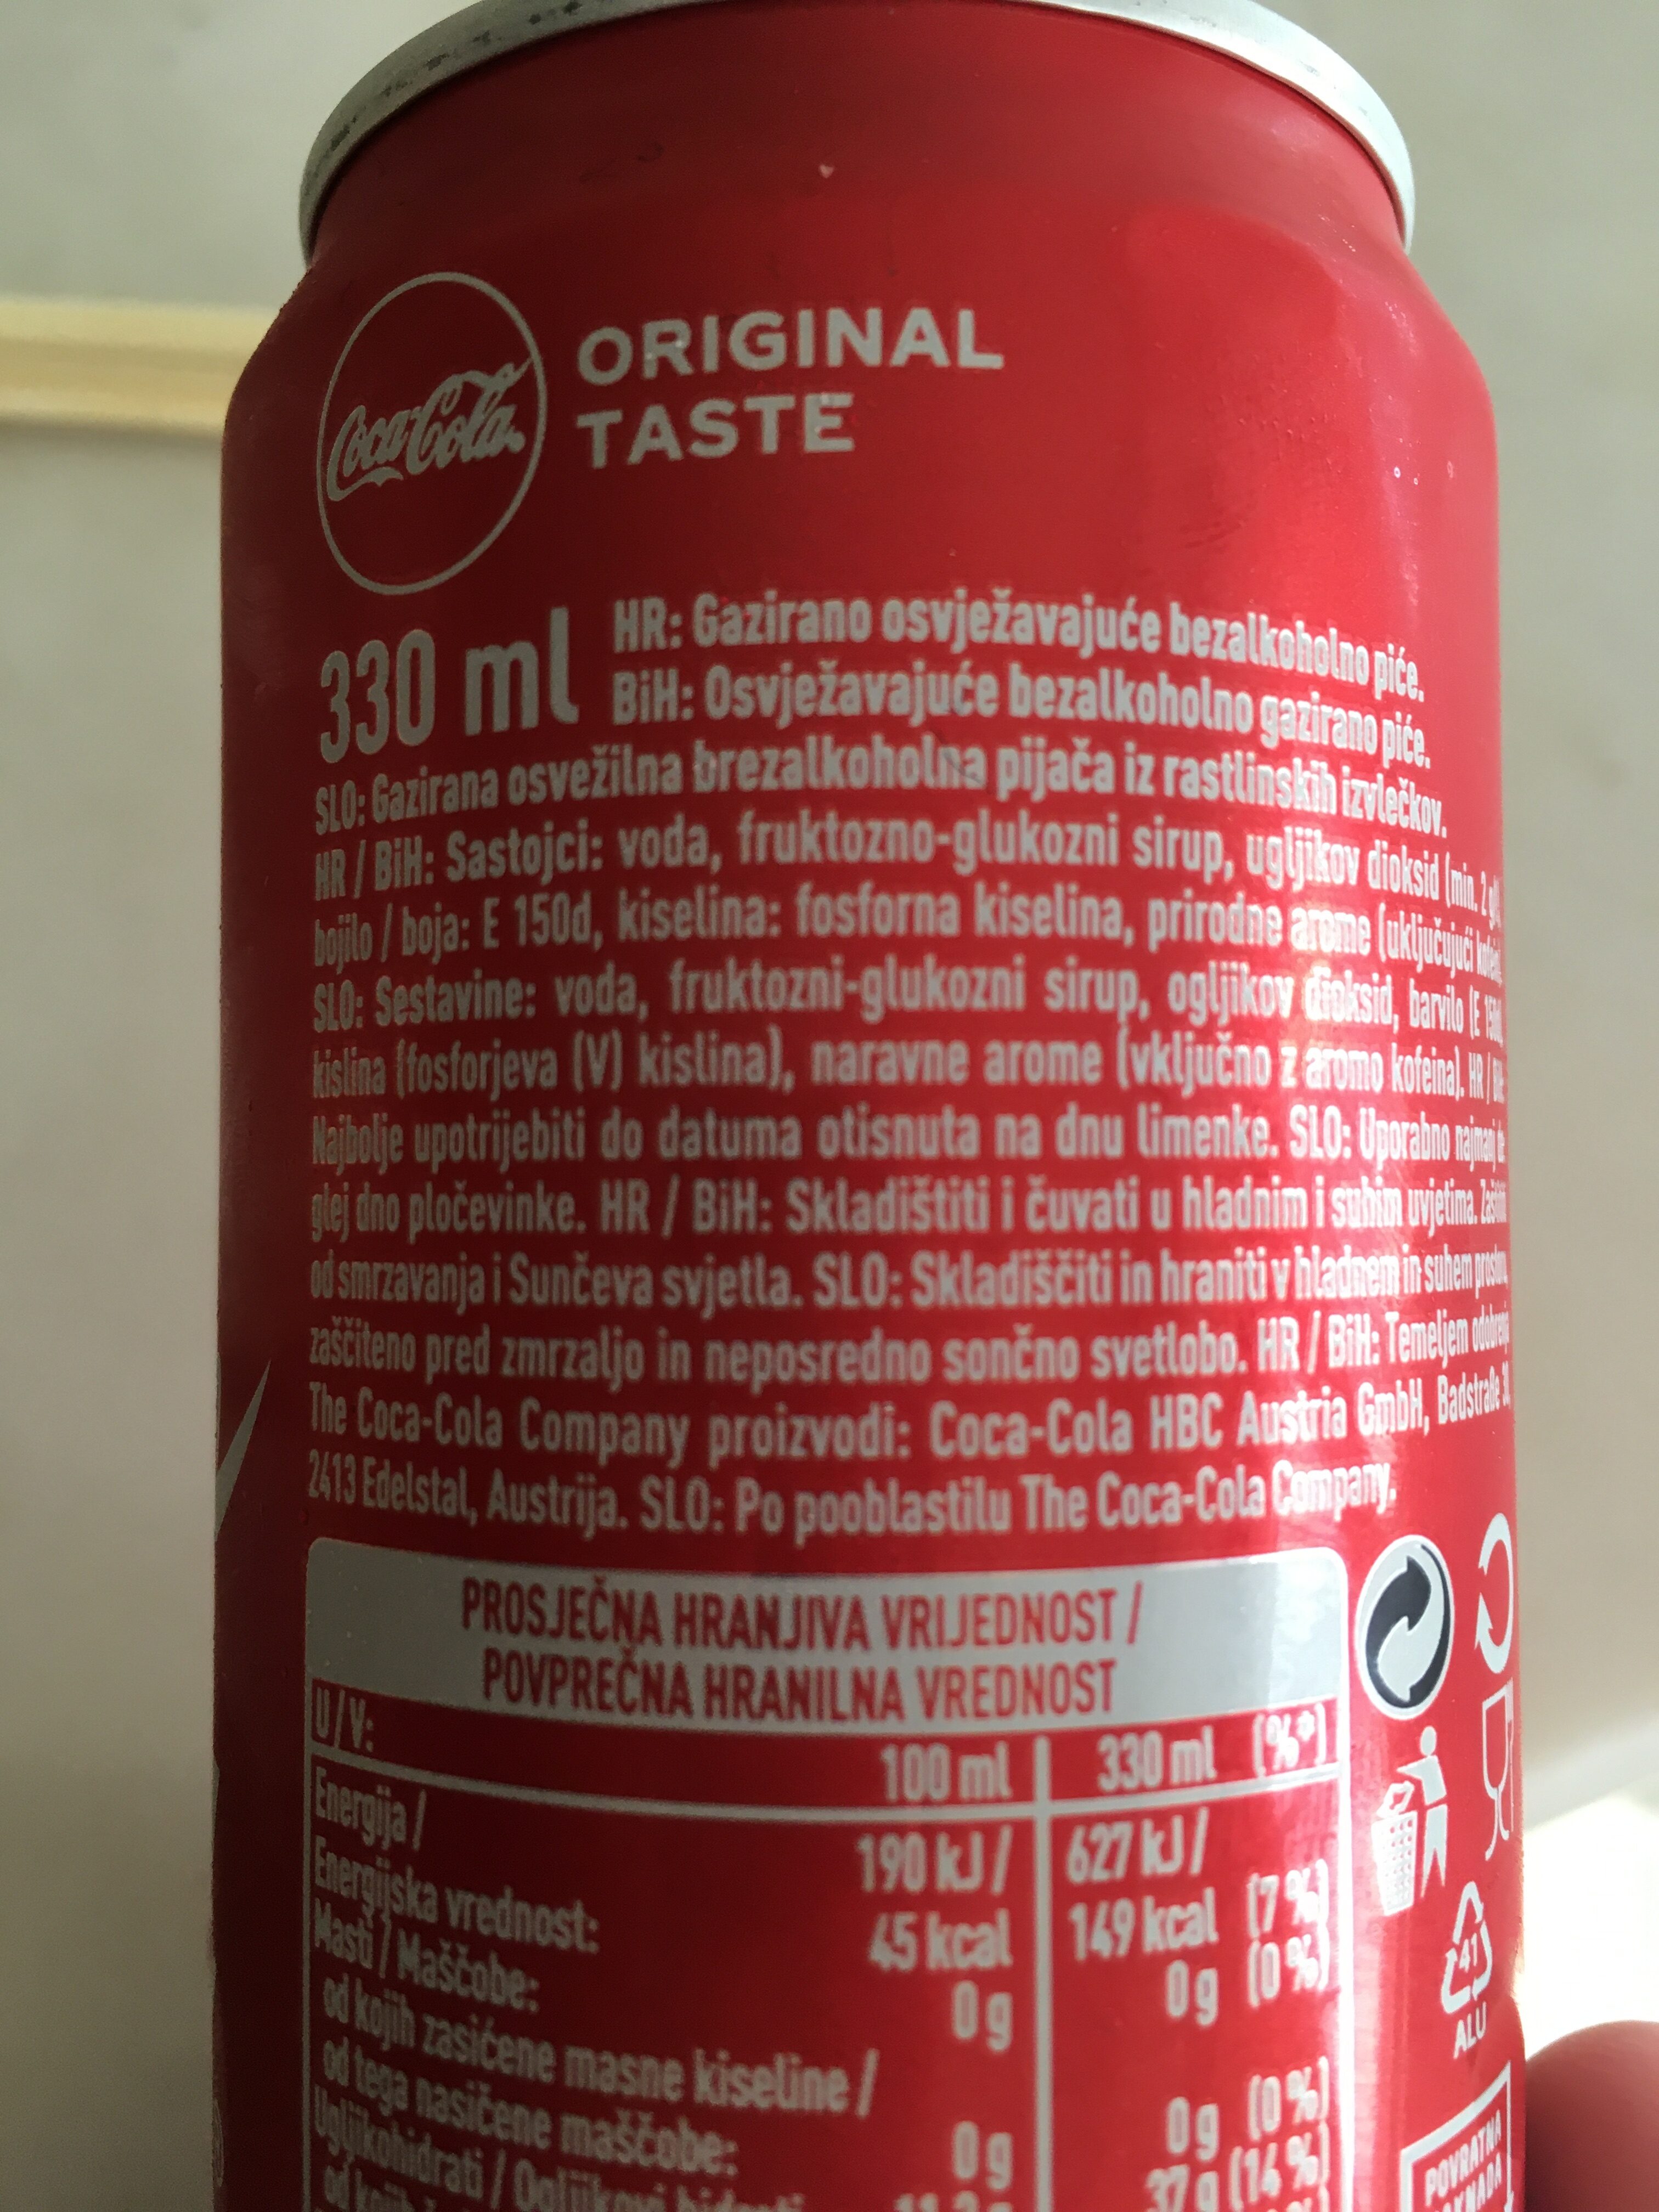 Coca-cola goût original - Ingredients